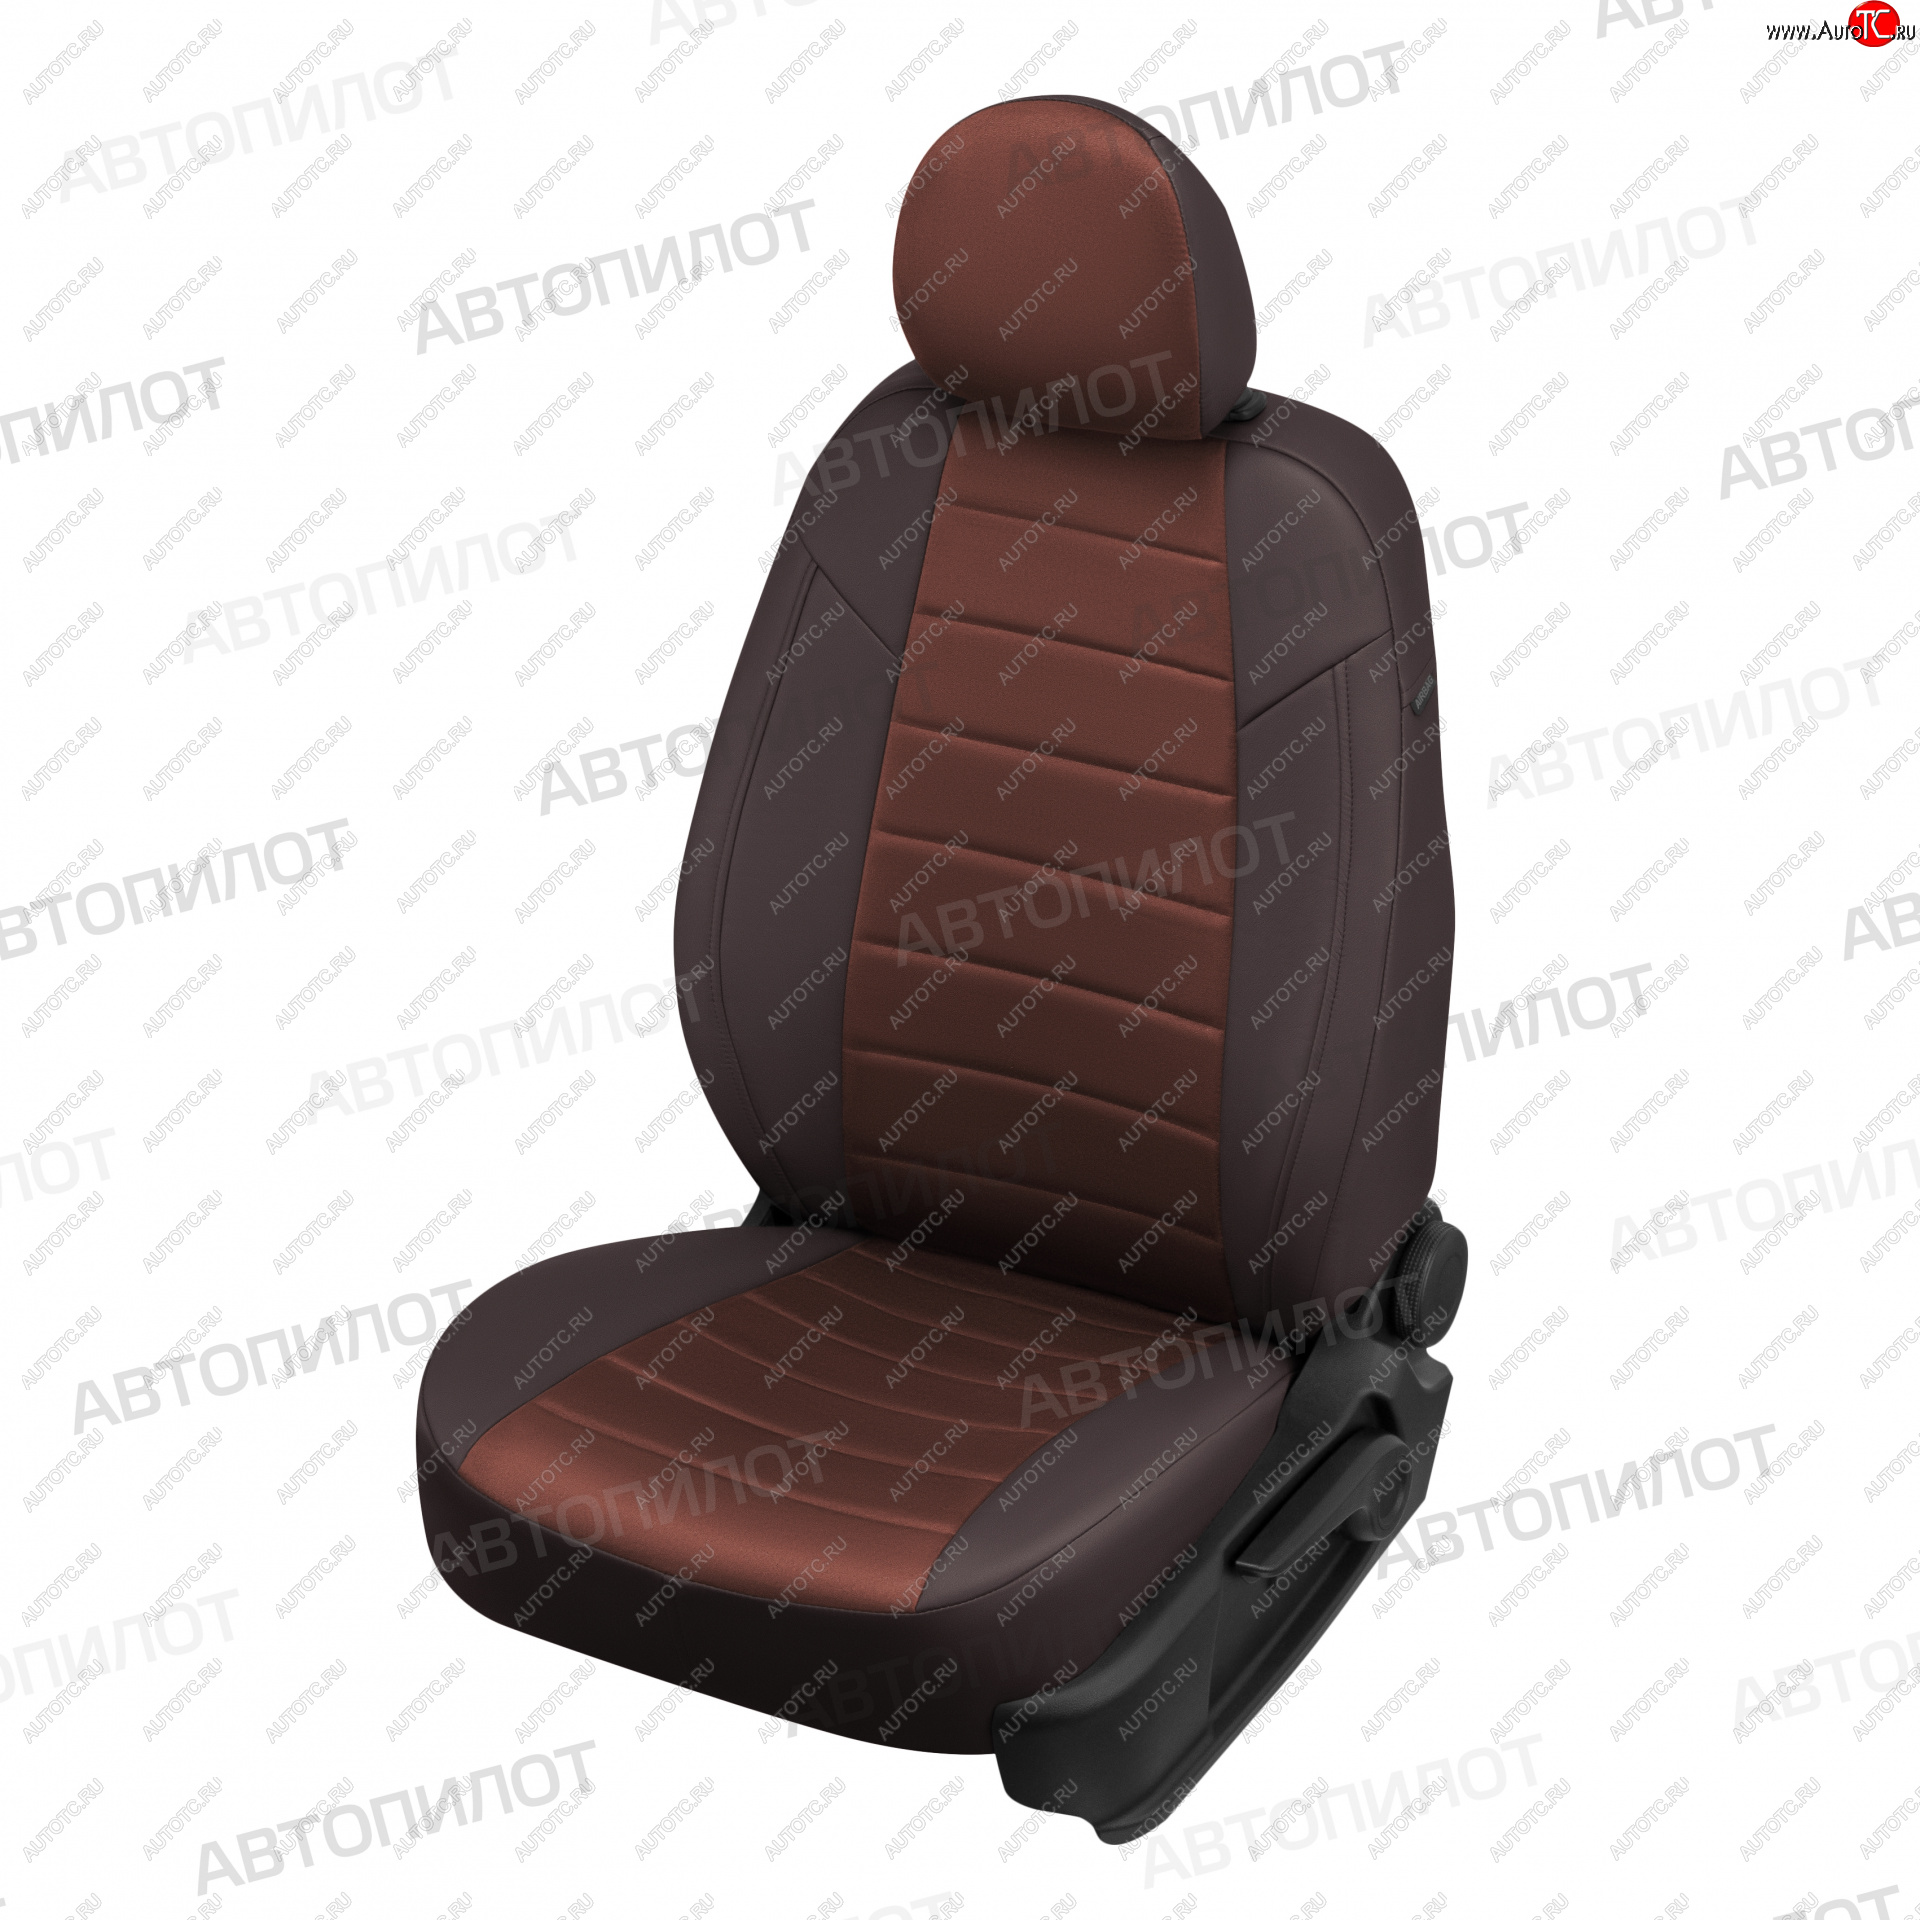 13 449 р. Чехлы сидений (Titanium, экокожа/алькантара) Автопилот  Ford Kuga  1 (2008-2013) (шоколад)